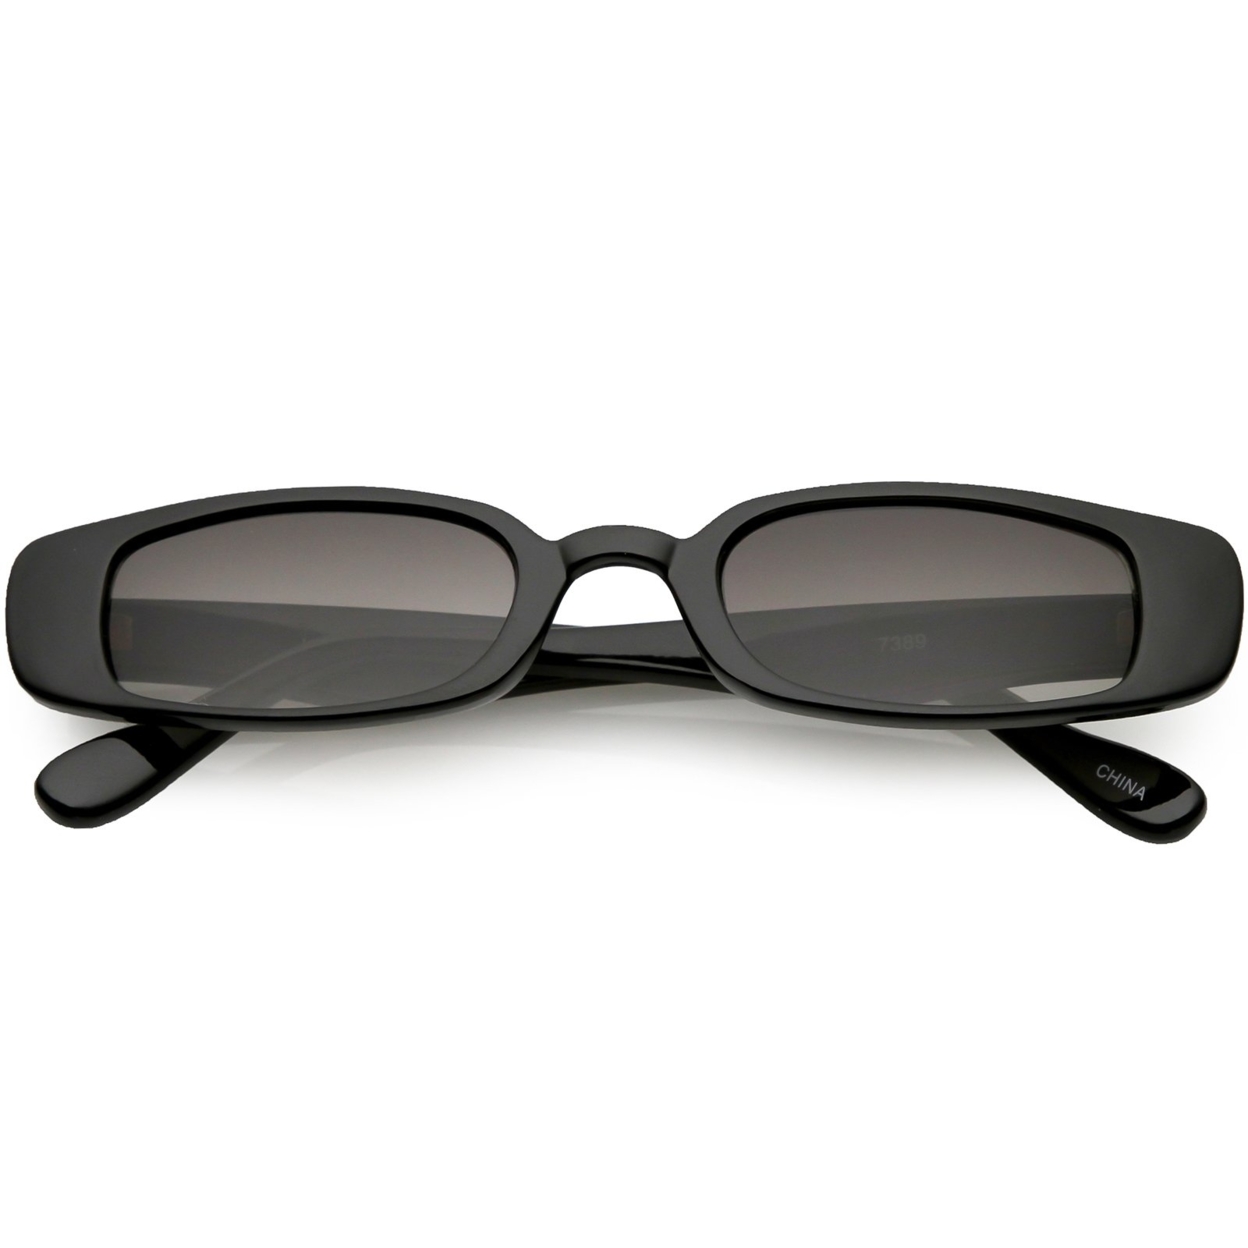 Extreme Thin Small Rectangle Sunglasses Neutral Colored Lens 49mm - Smoke / Smoke